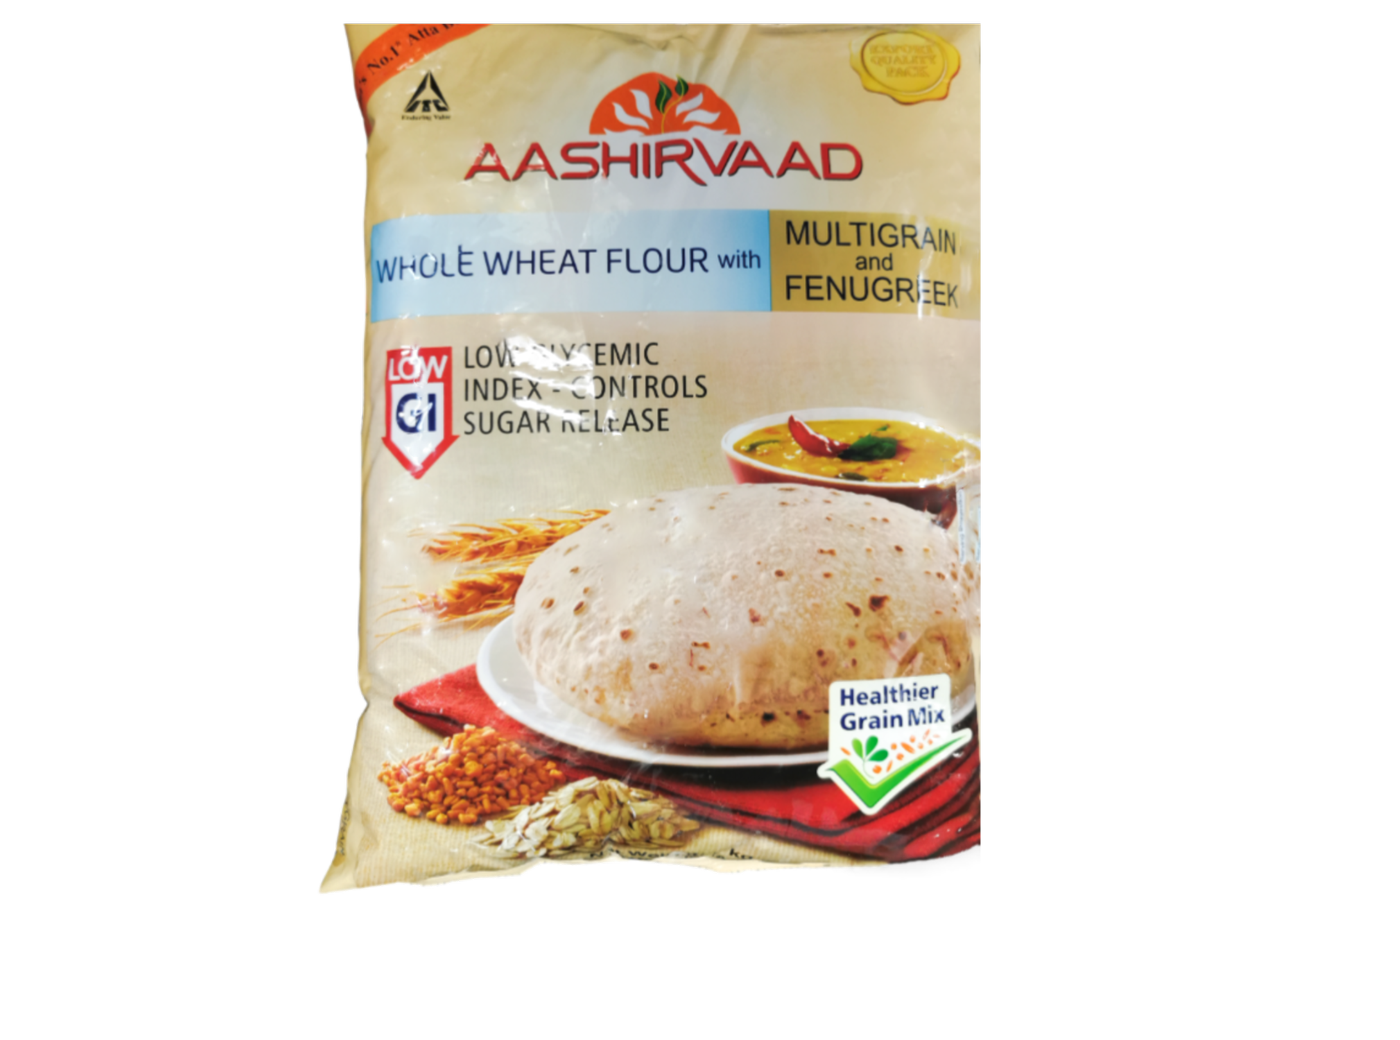 Aashirvaad Whole Wheat Flour with Multigrain and Fenugreek